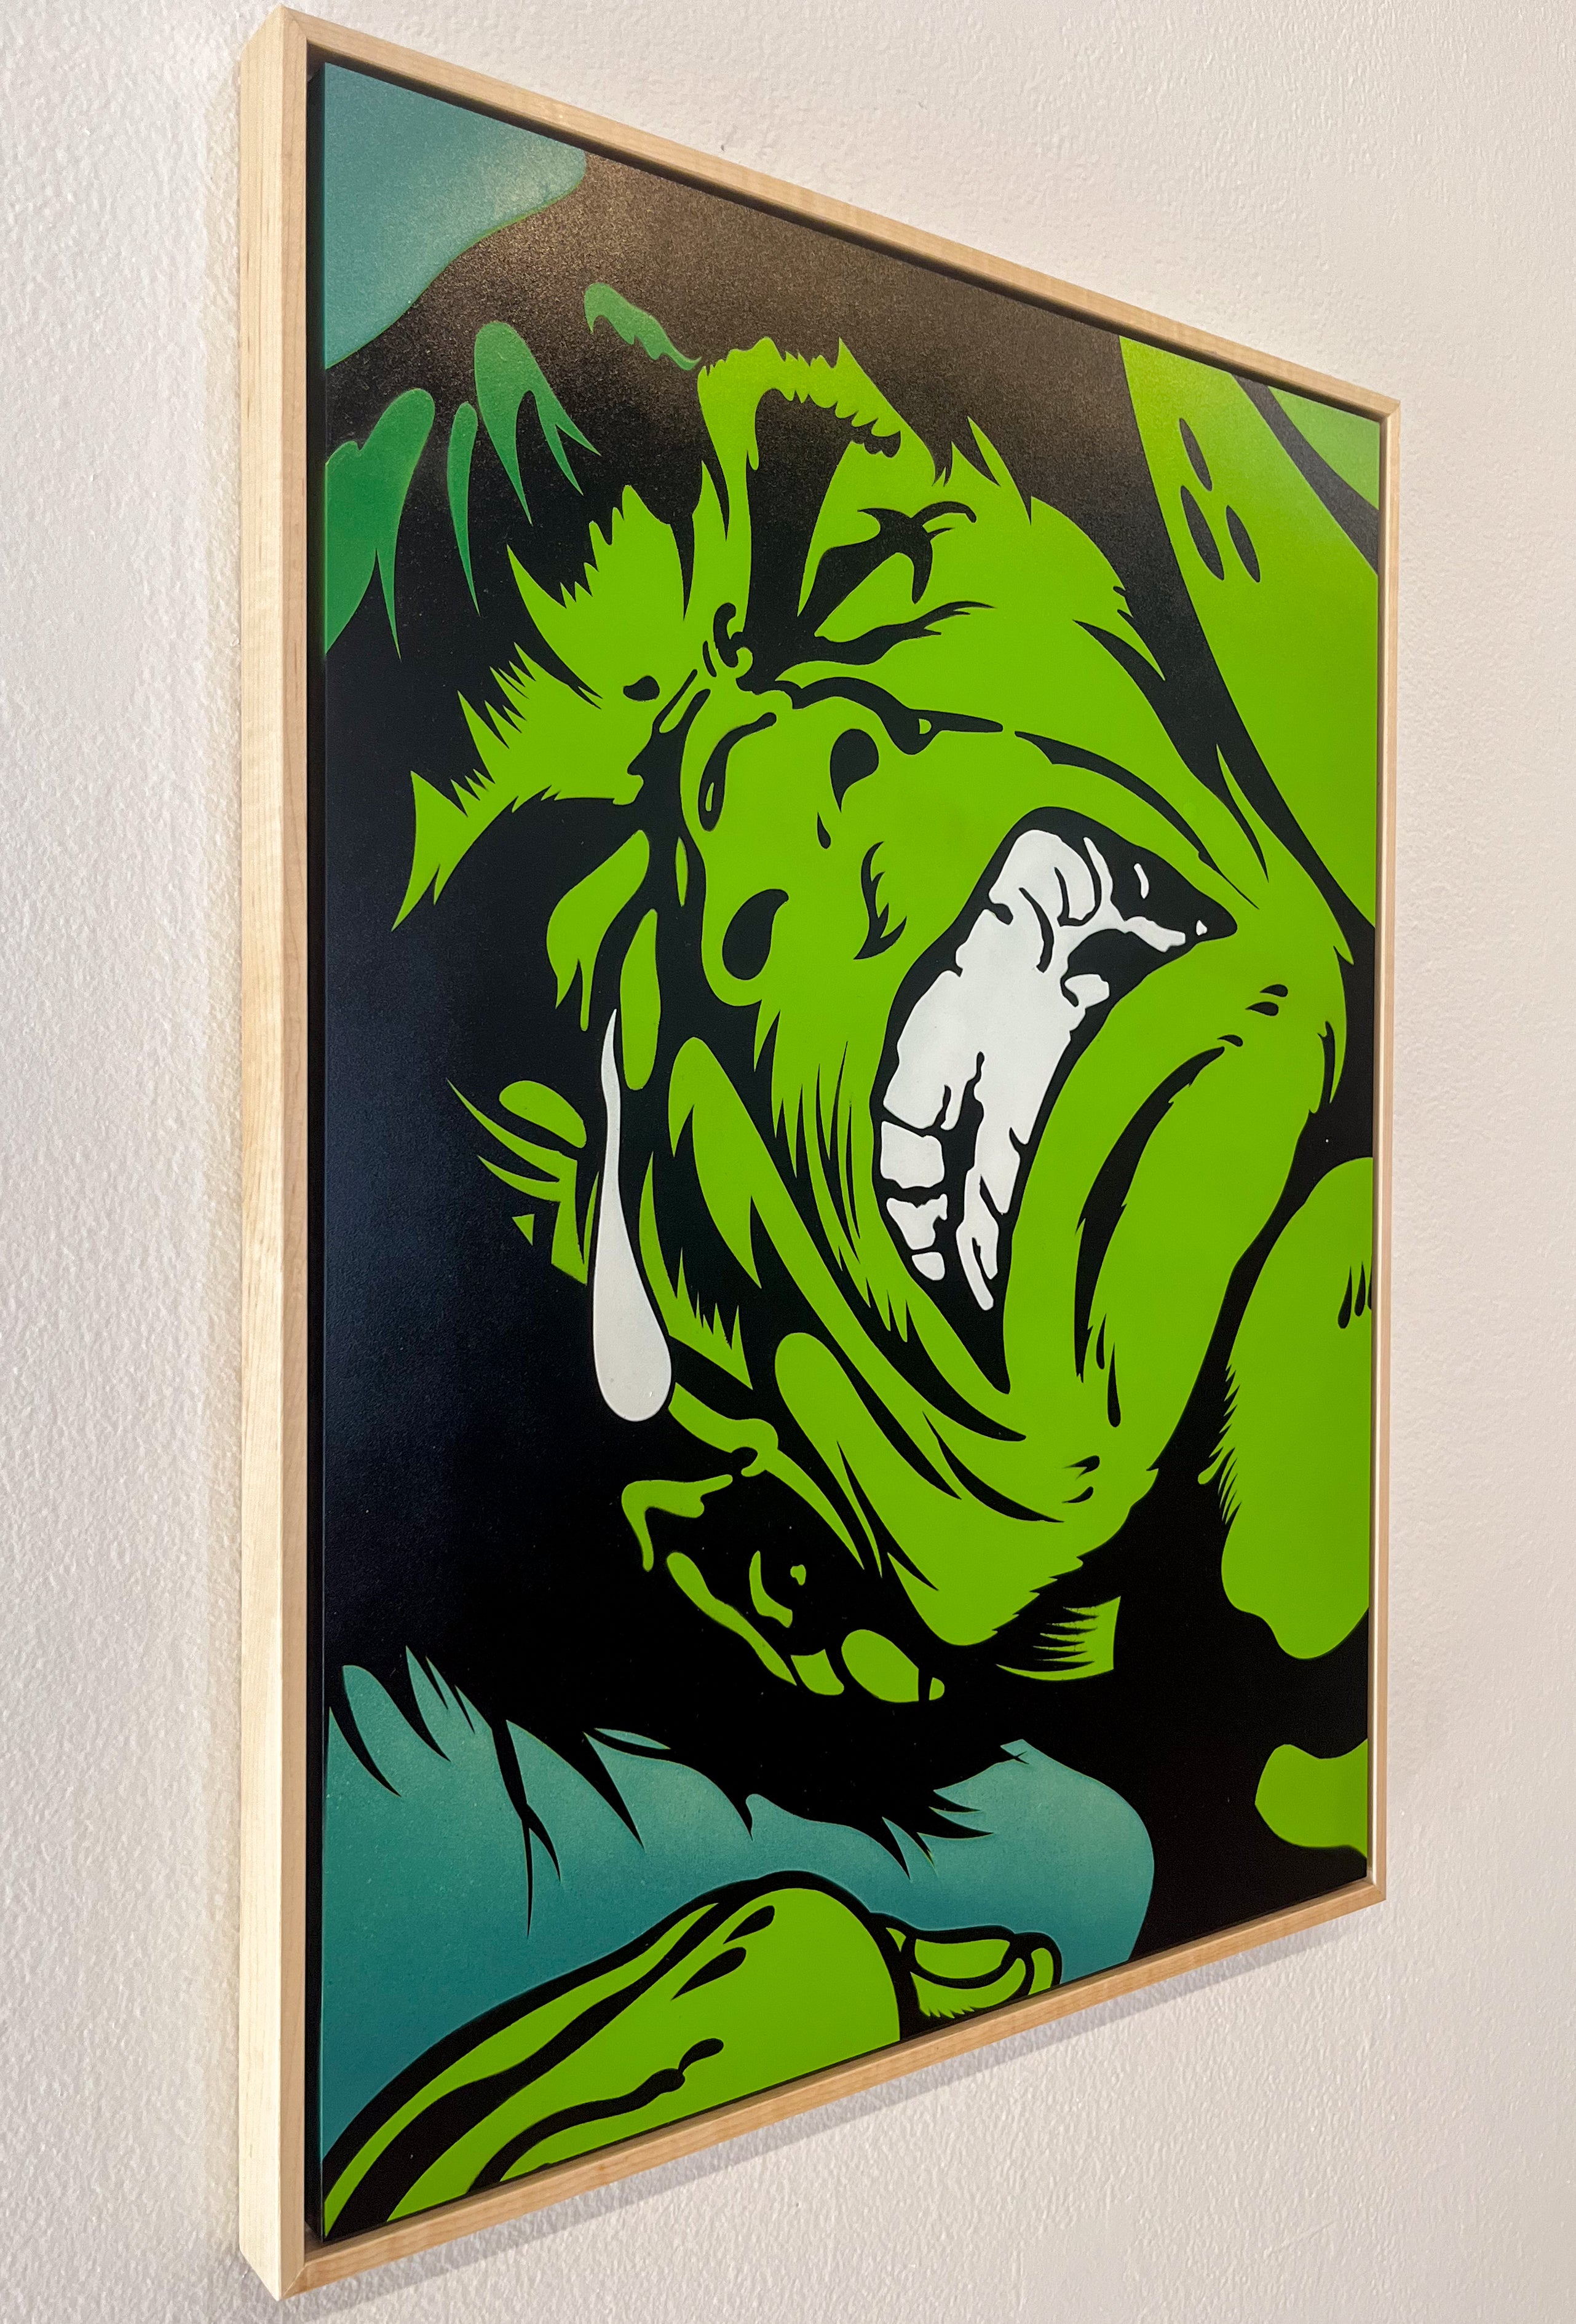 "The Hulk's Anguish" by R6D4